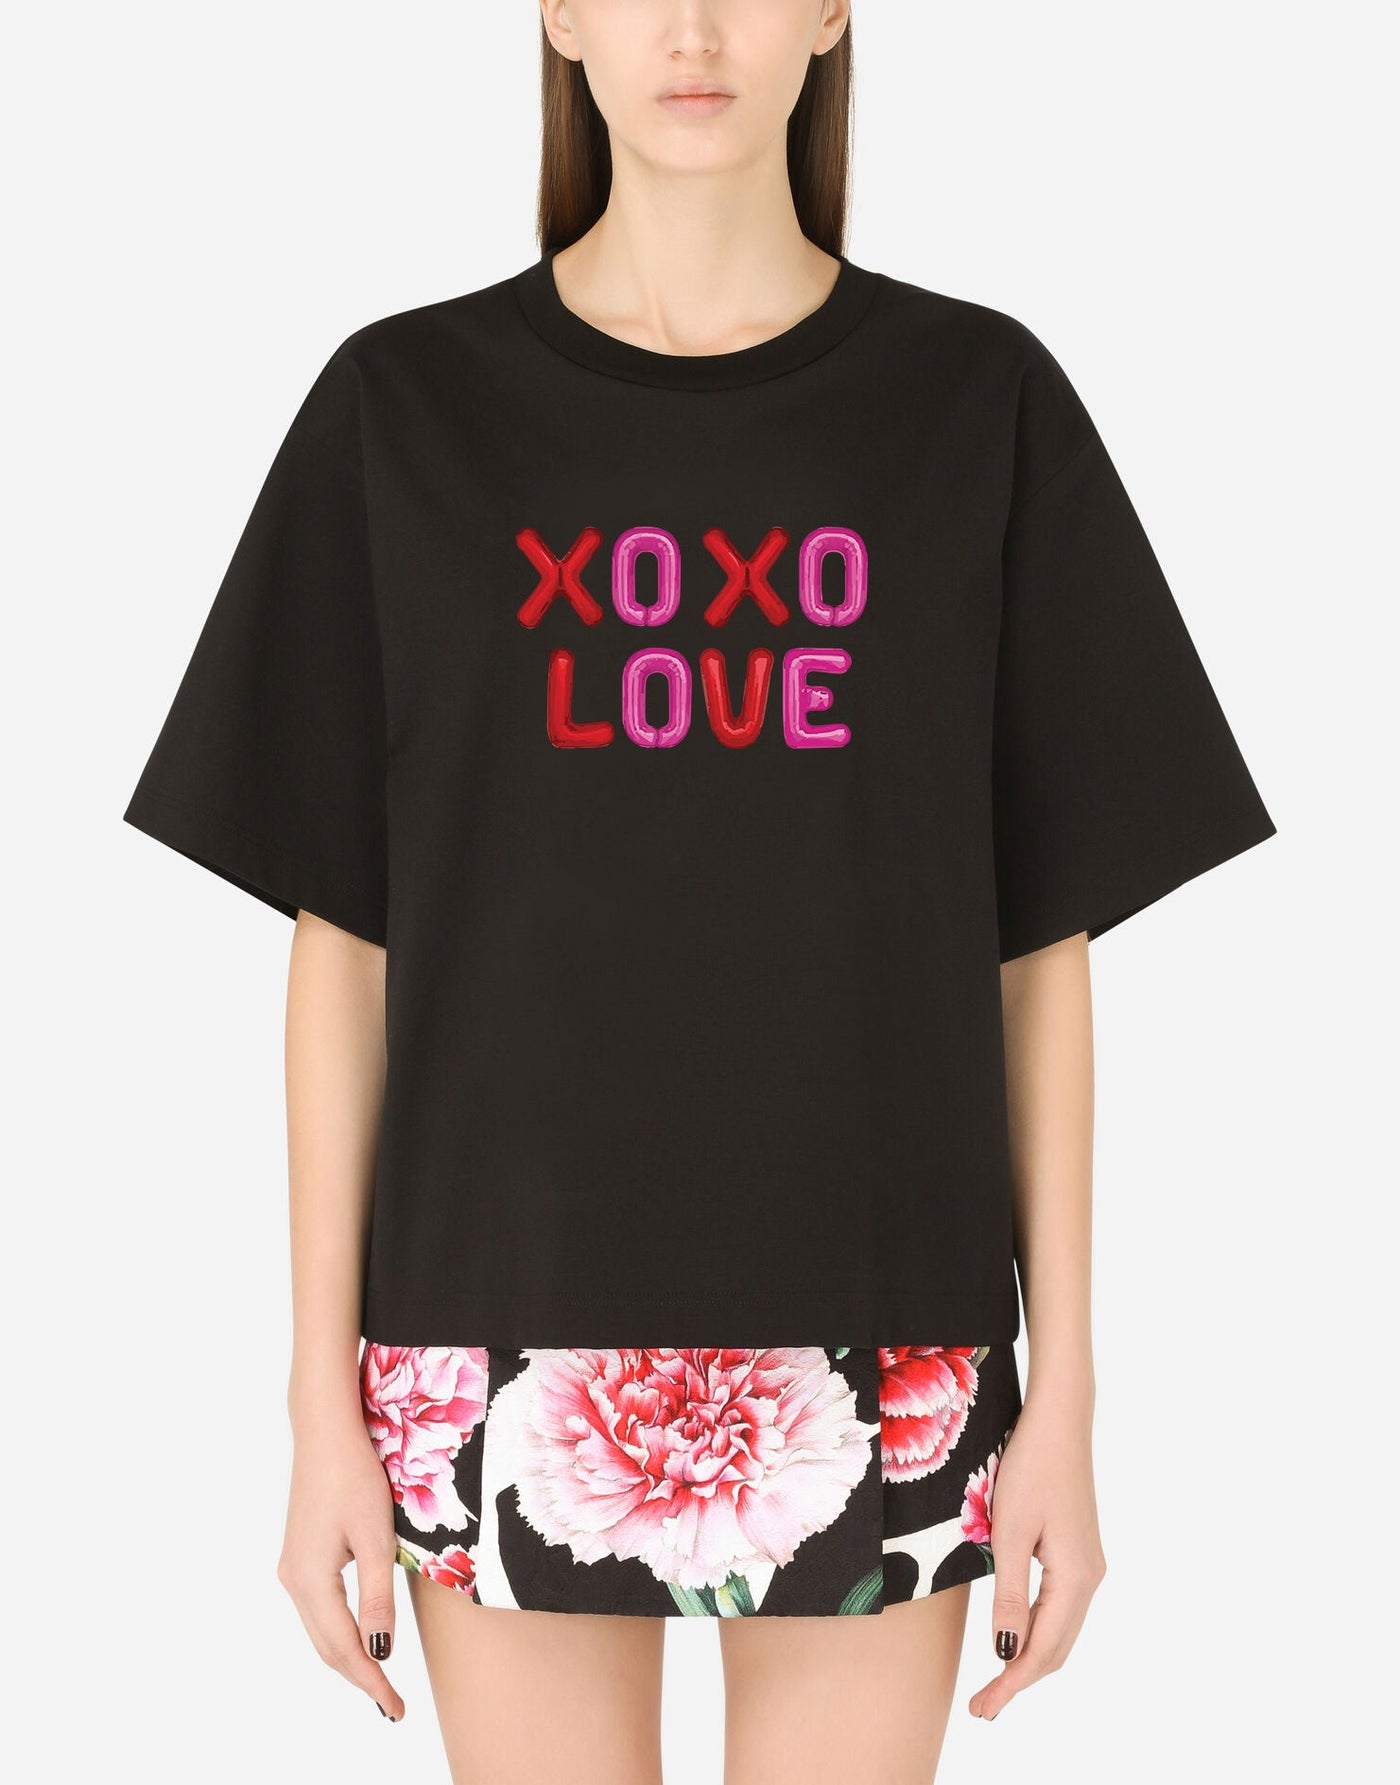 XOXO Love Text T-shirt - EUG FASHION EugFashion 